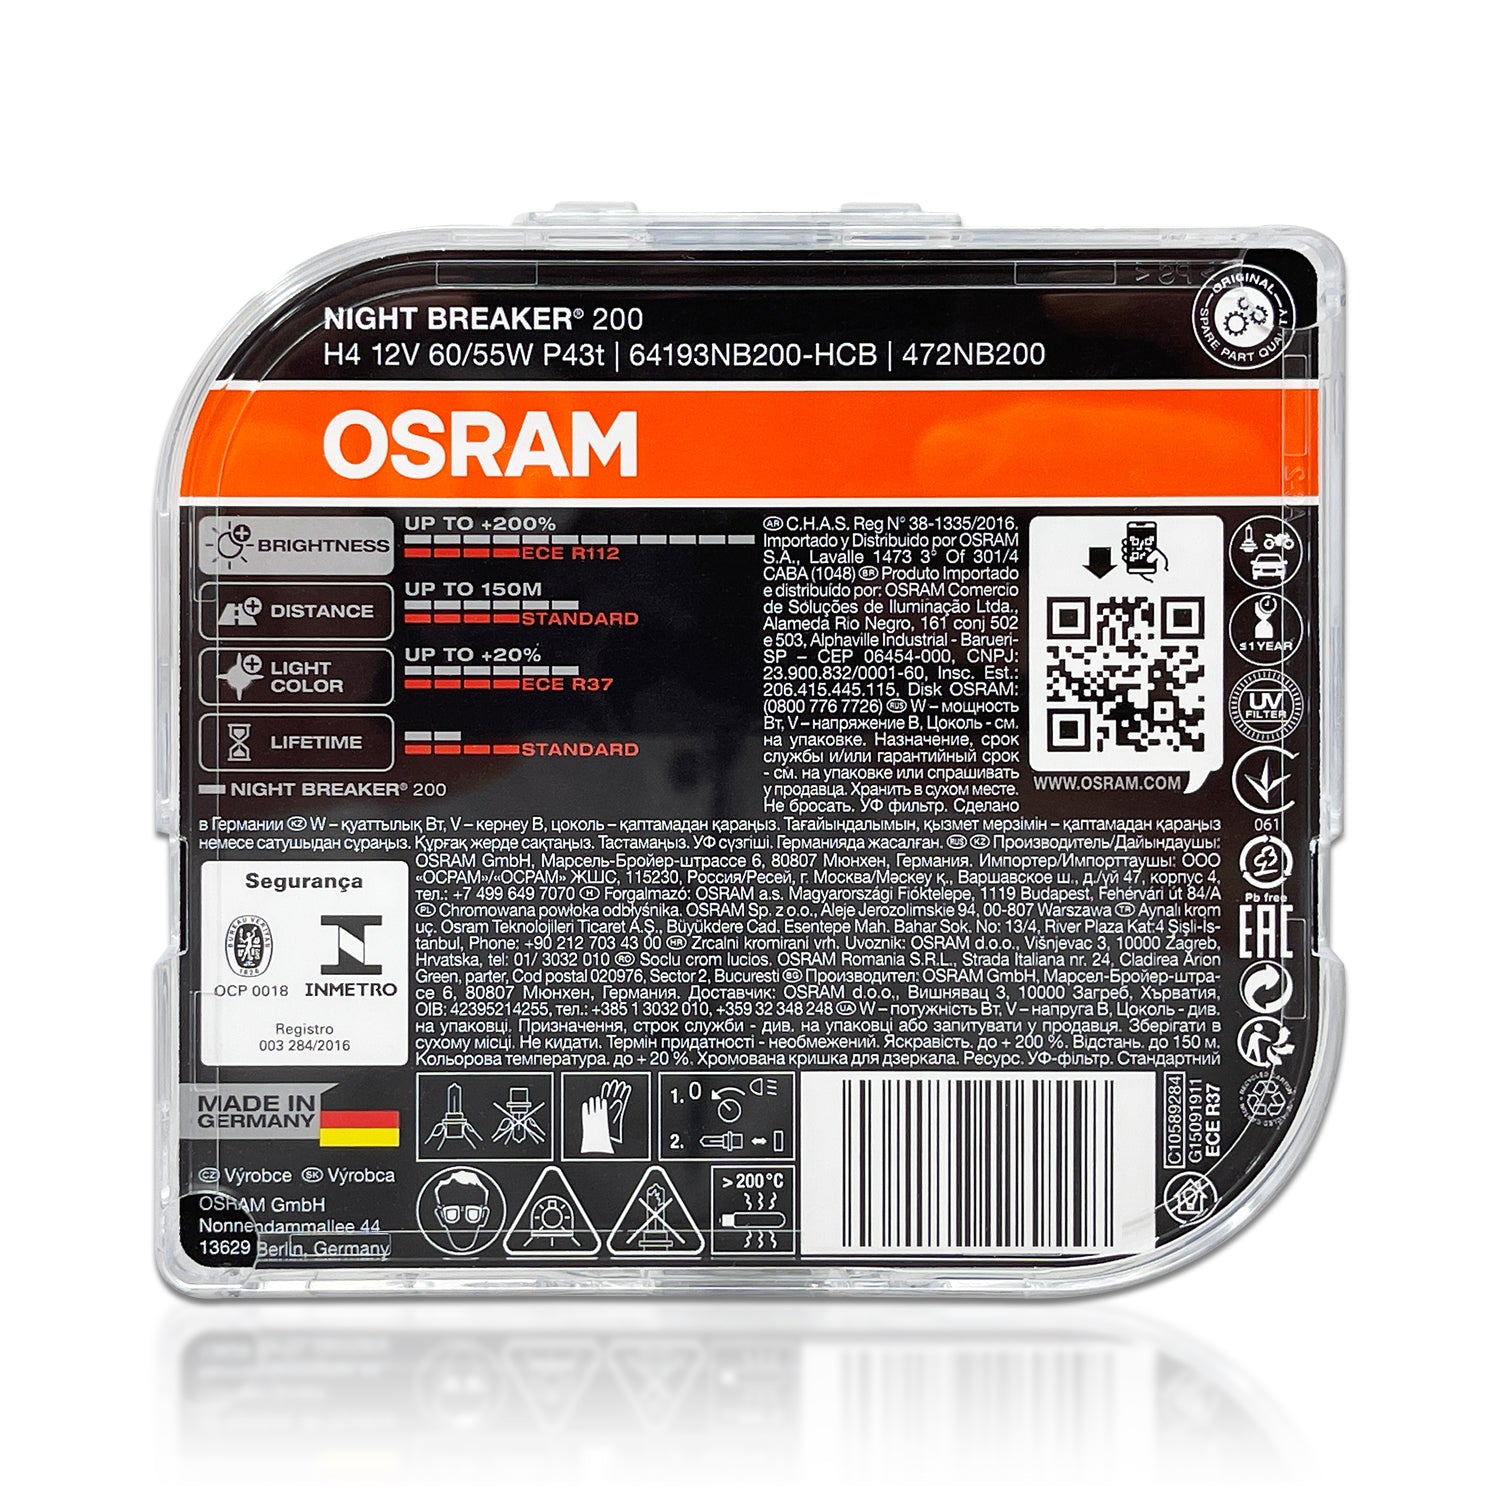 2 Ampoules OSRAM H4 Night Breaker® Laser 12V - Roady